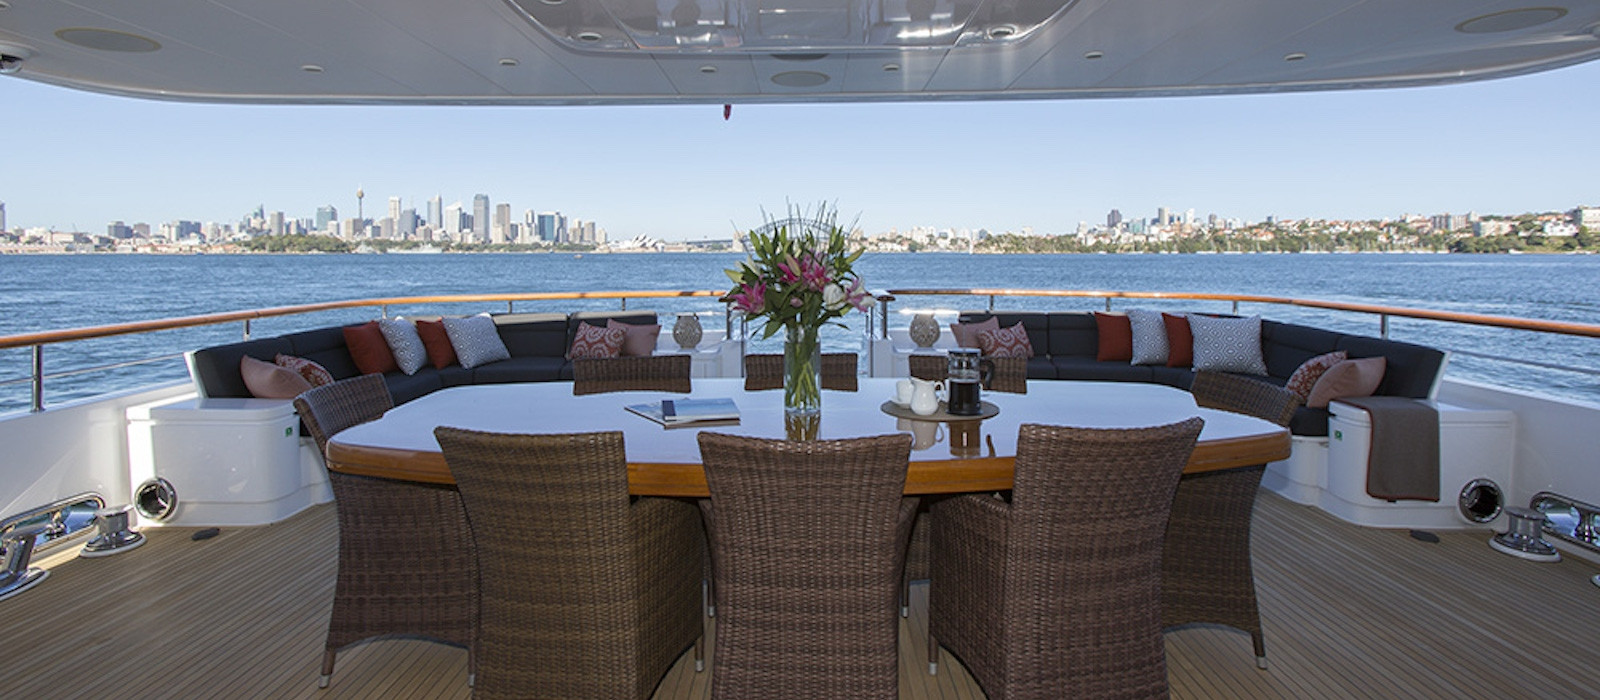 Aft deck dining on Masteka II luxury boat hire